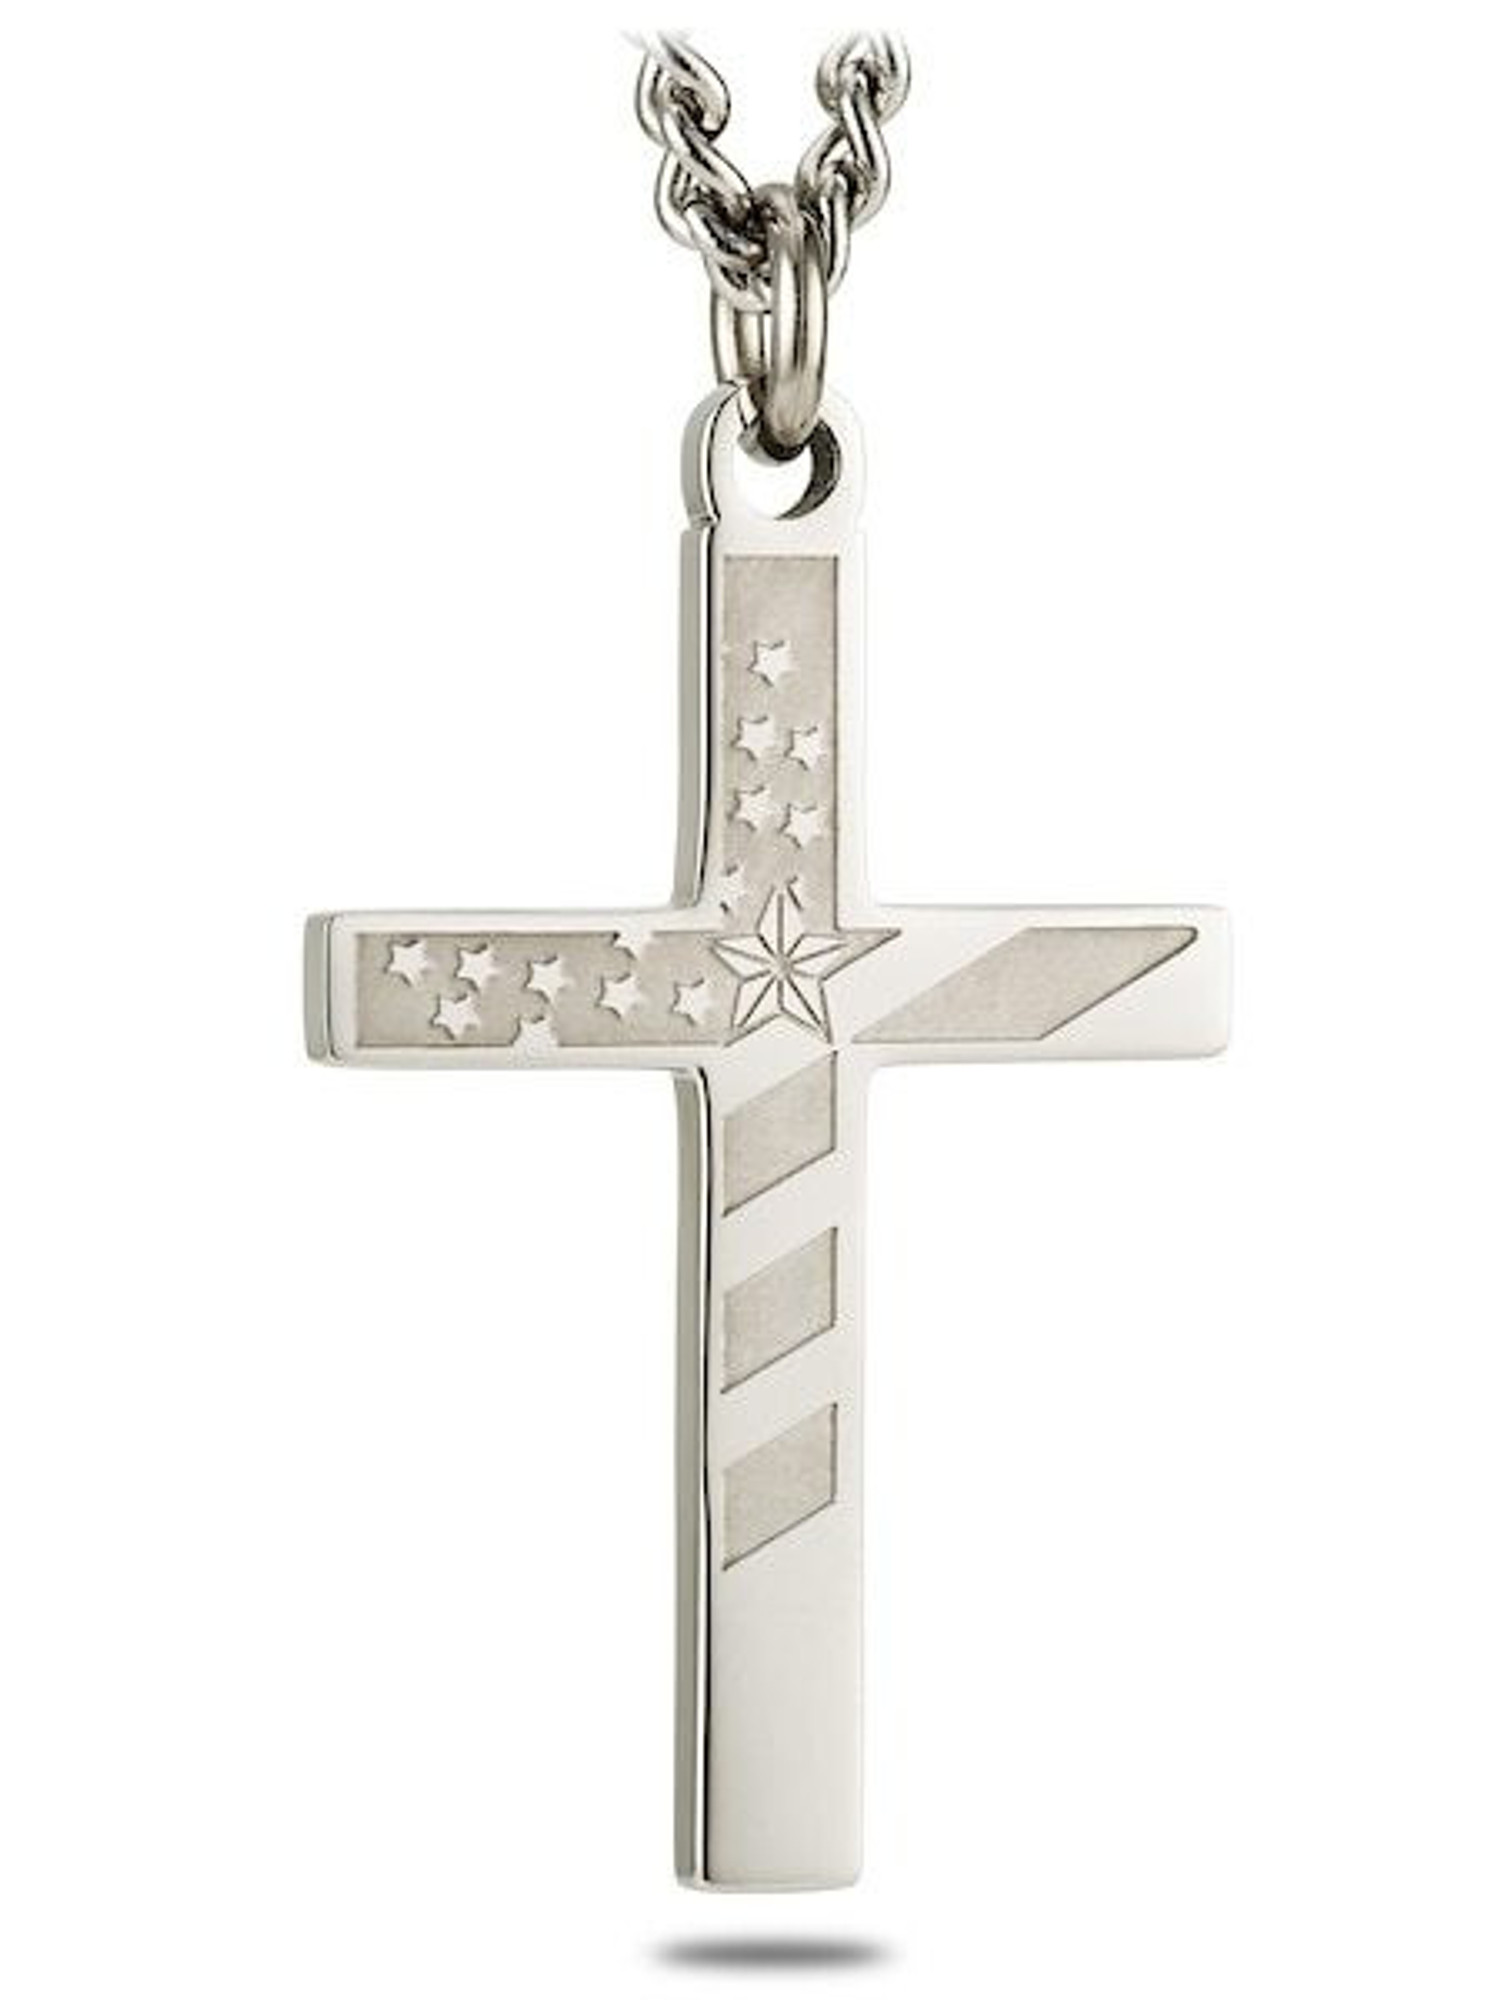 Christian Cross Necklace - Cross Pendant Of Silver